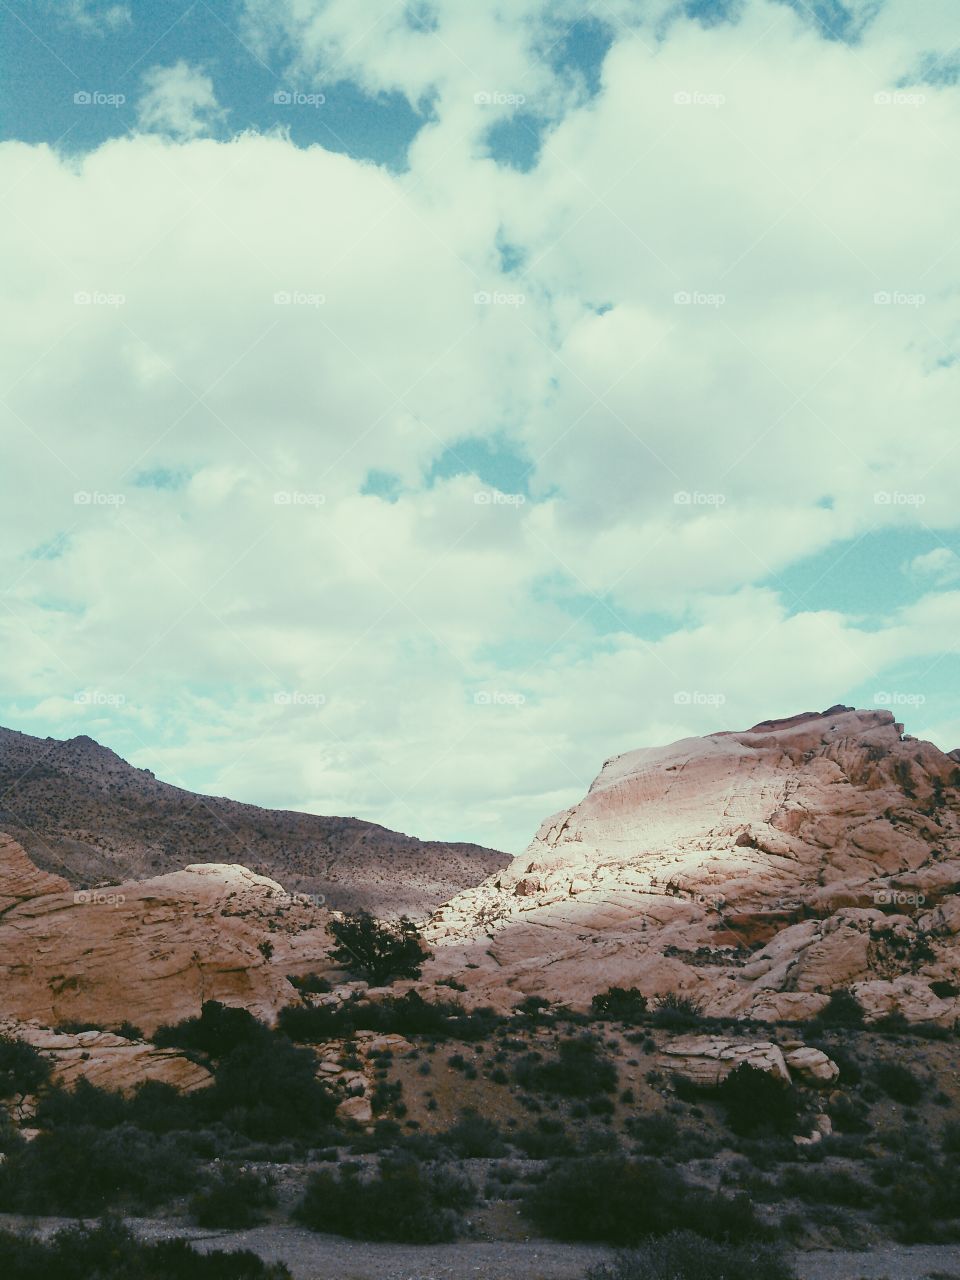 USA 1/25. Red Rock Canyon, NV, 2014